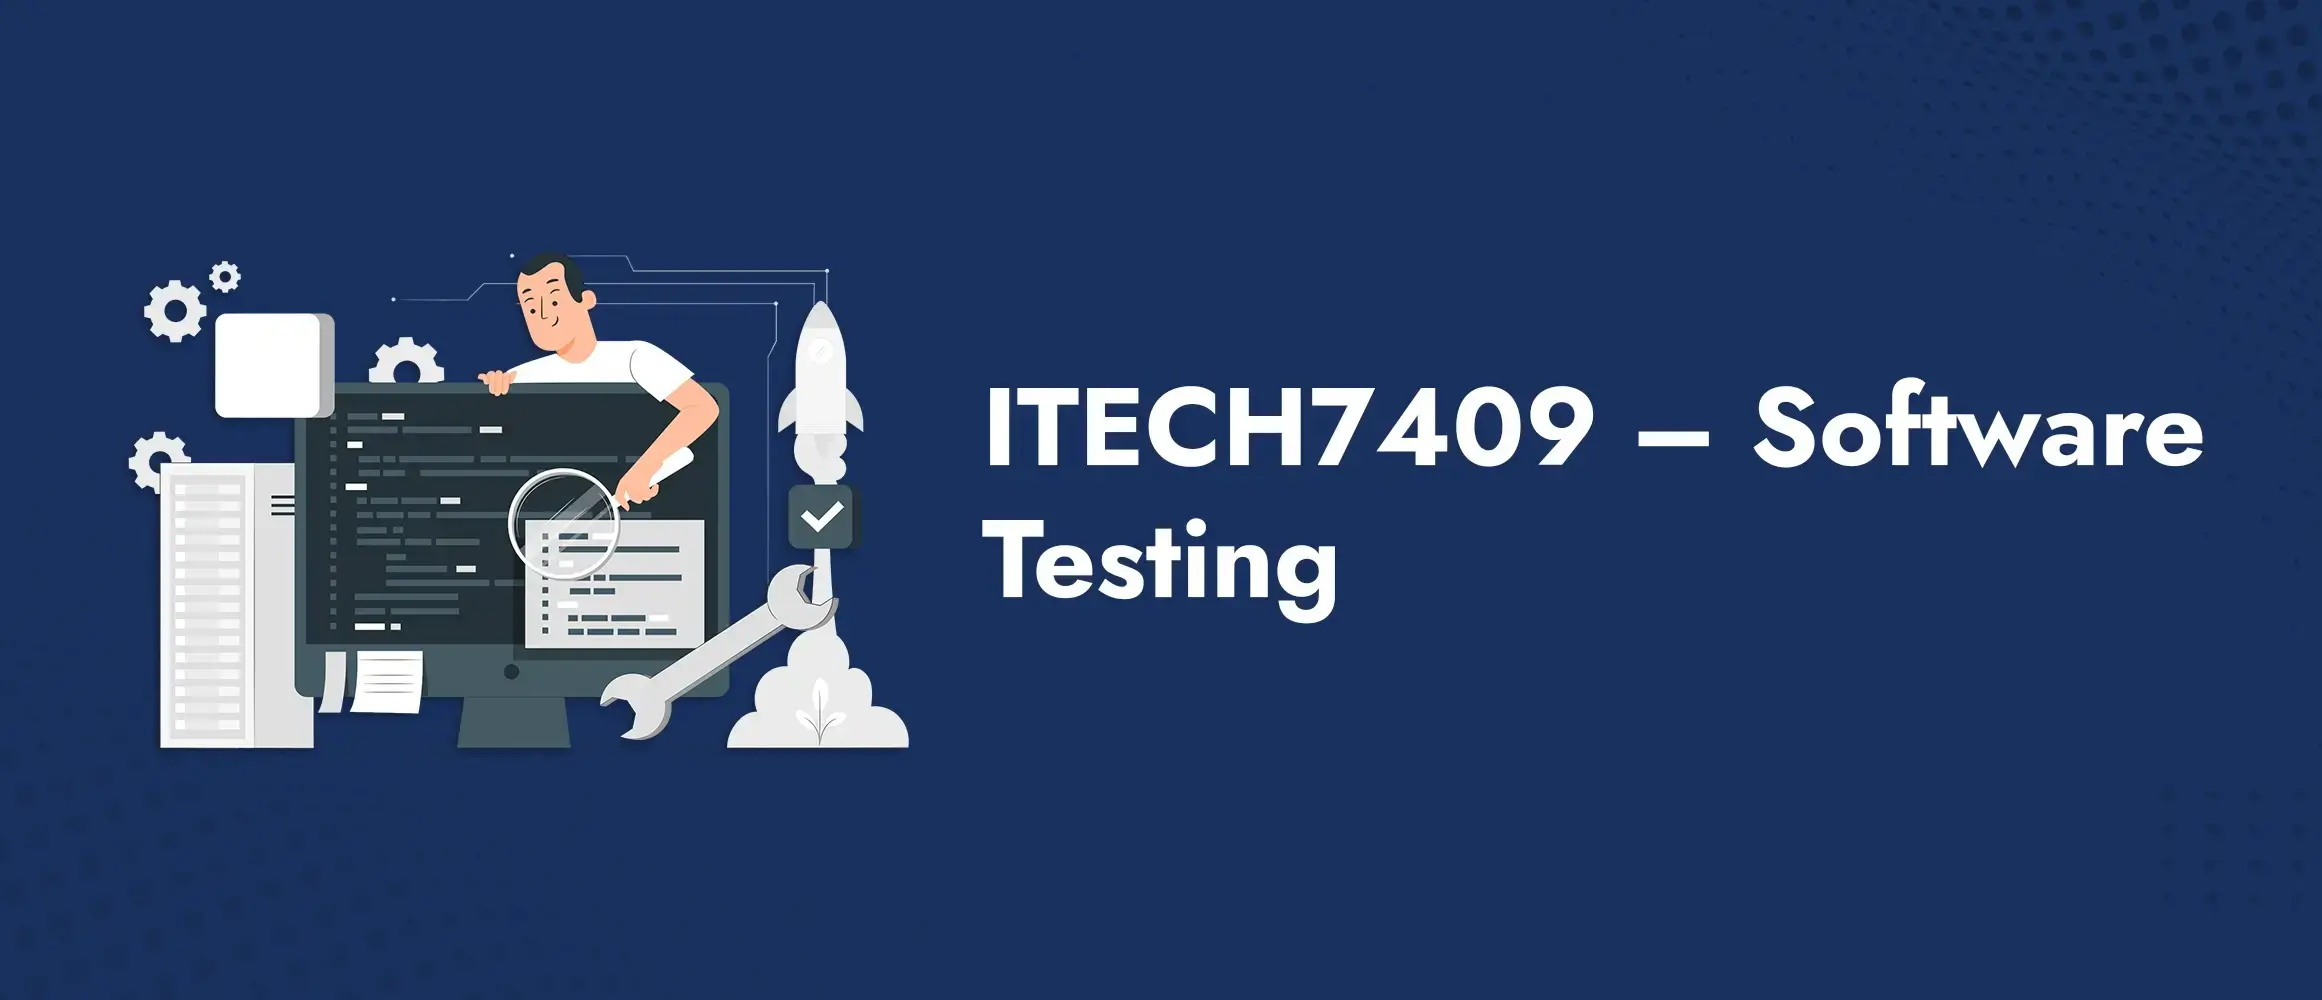 ITECH7409 Software Testing